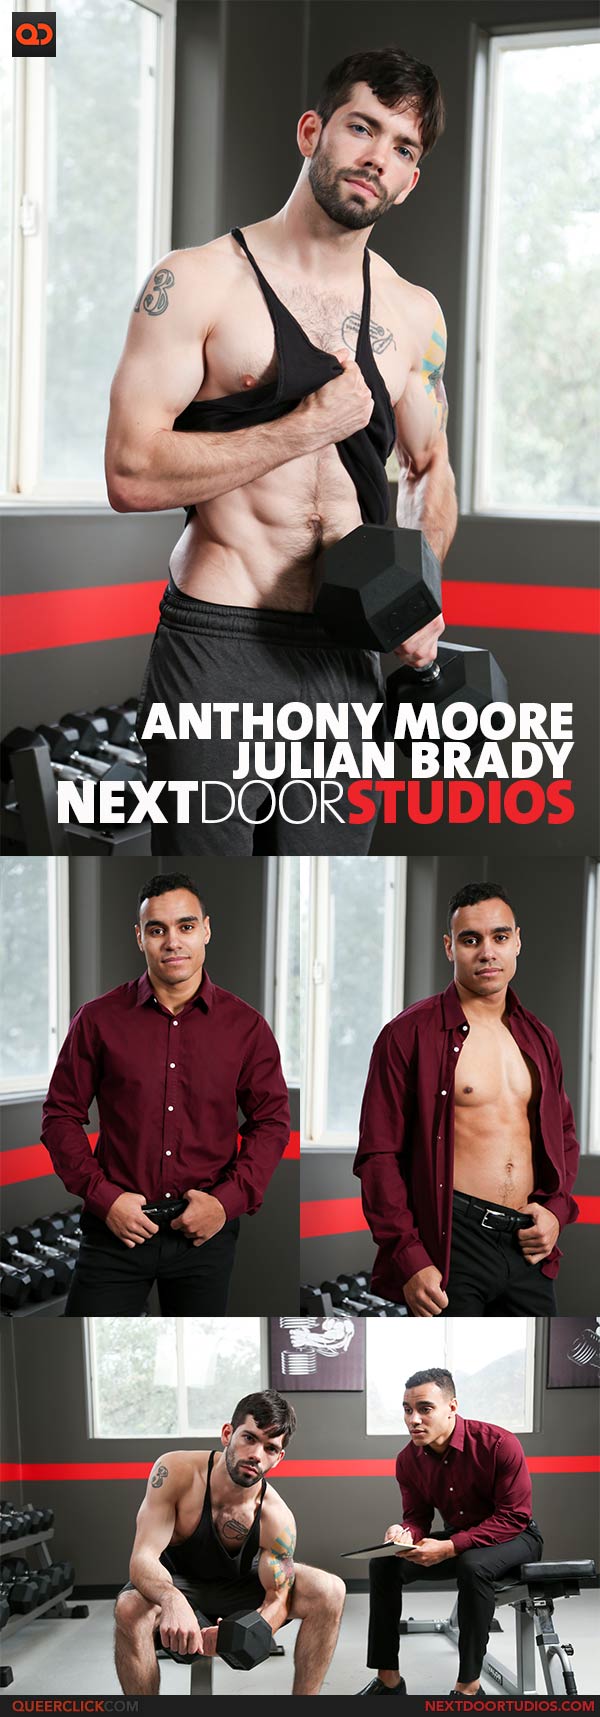 NextDoorStudios: Julian Brady and Anthony Moore